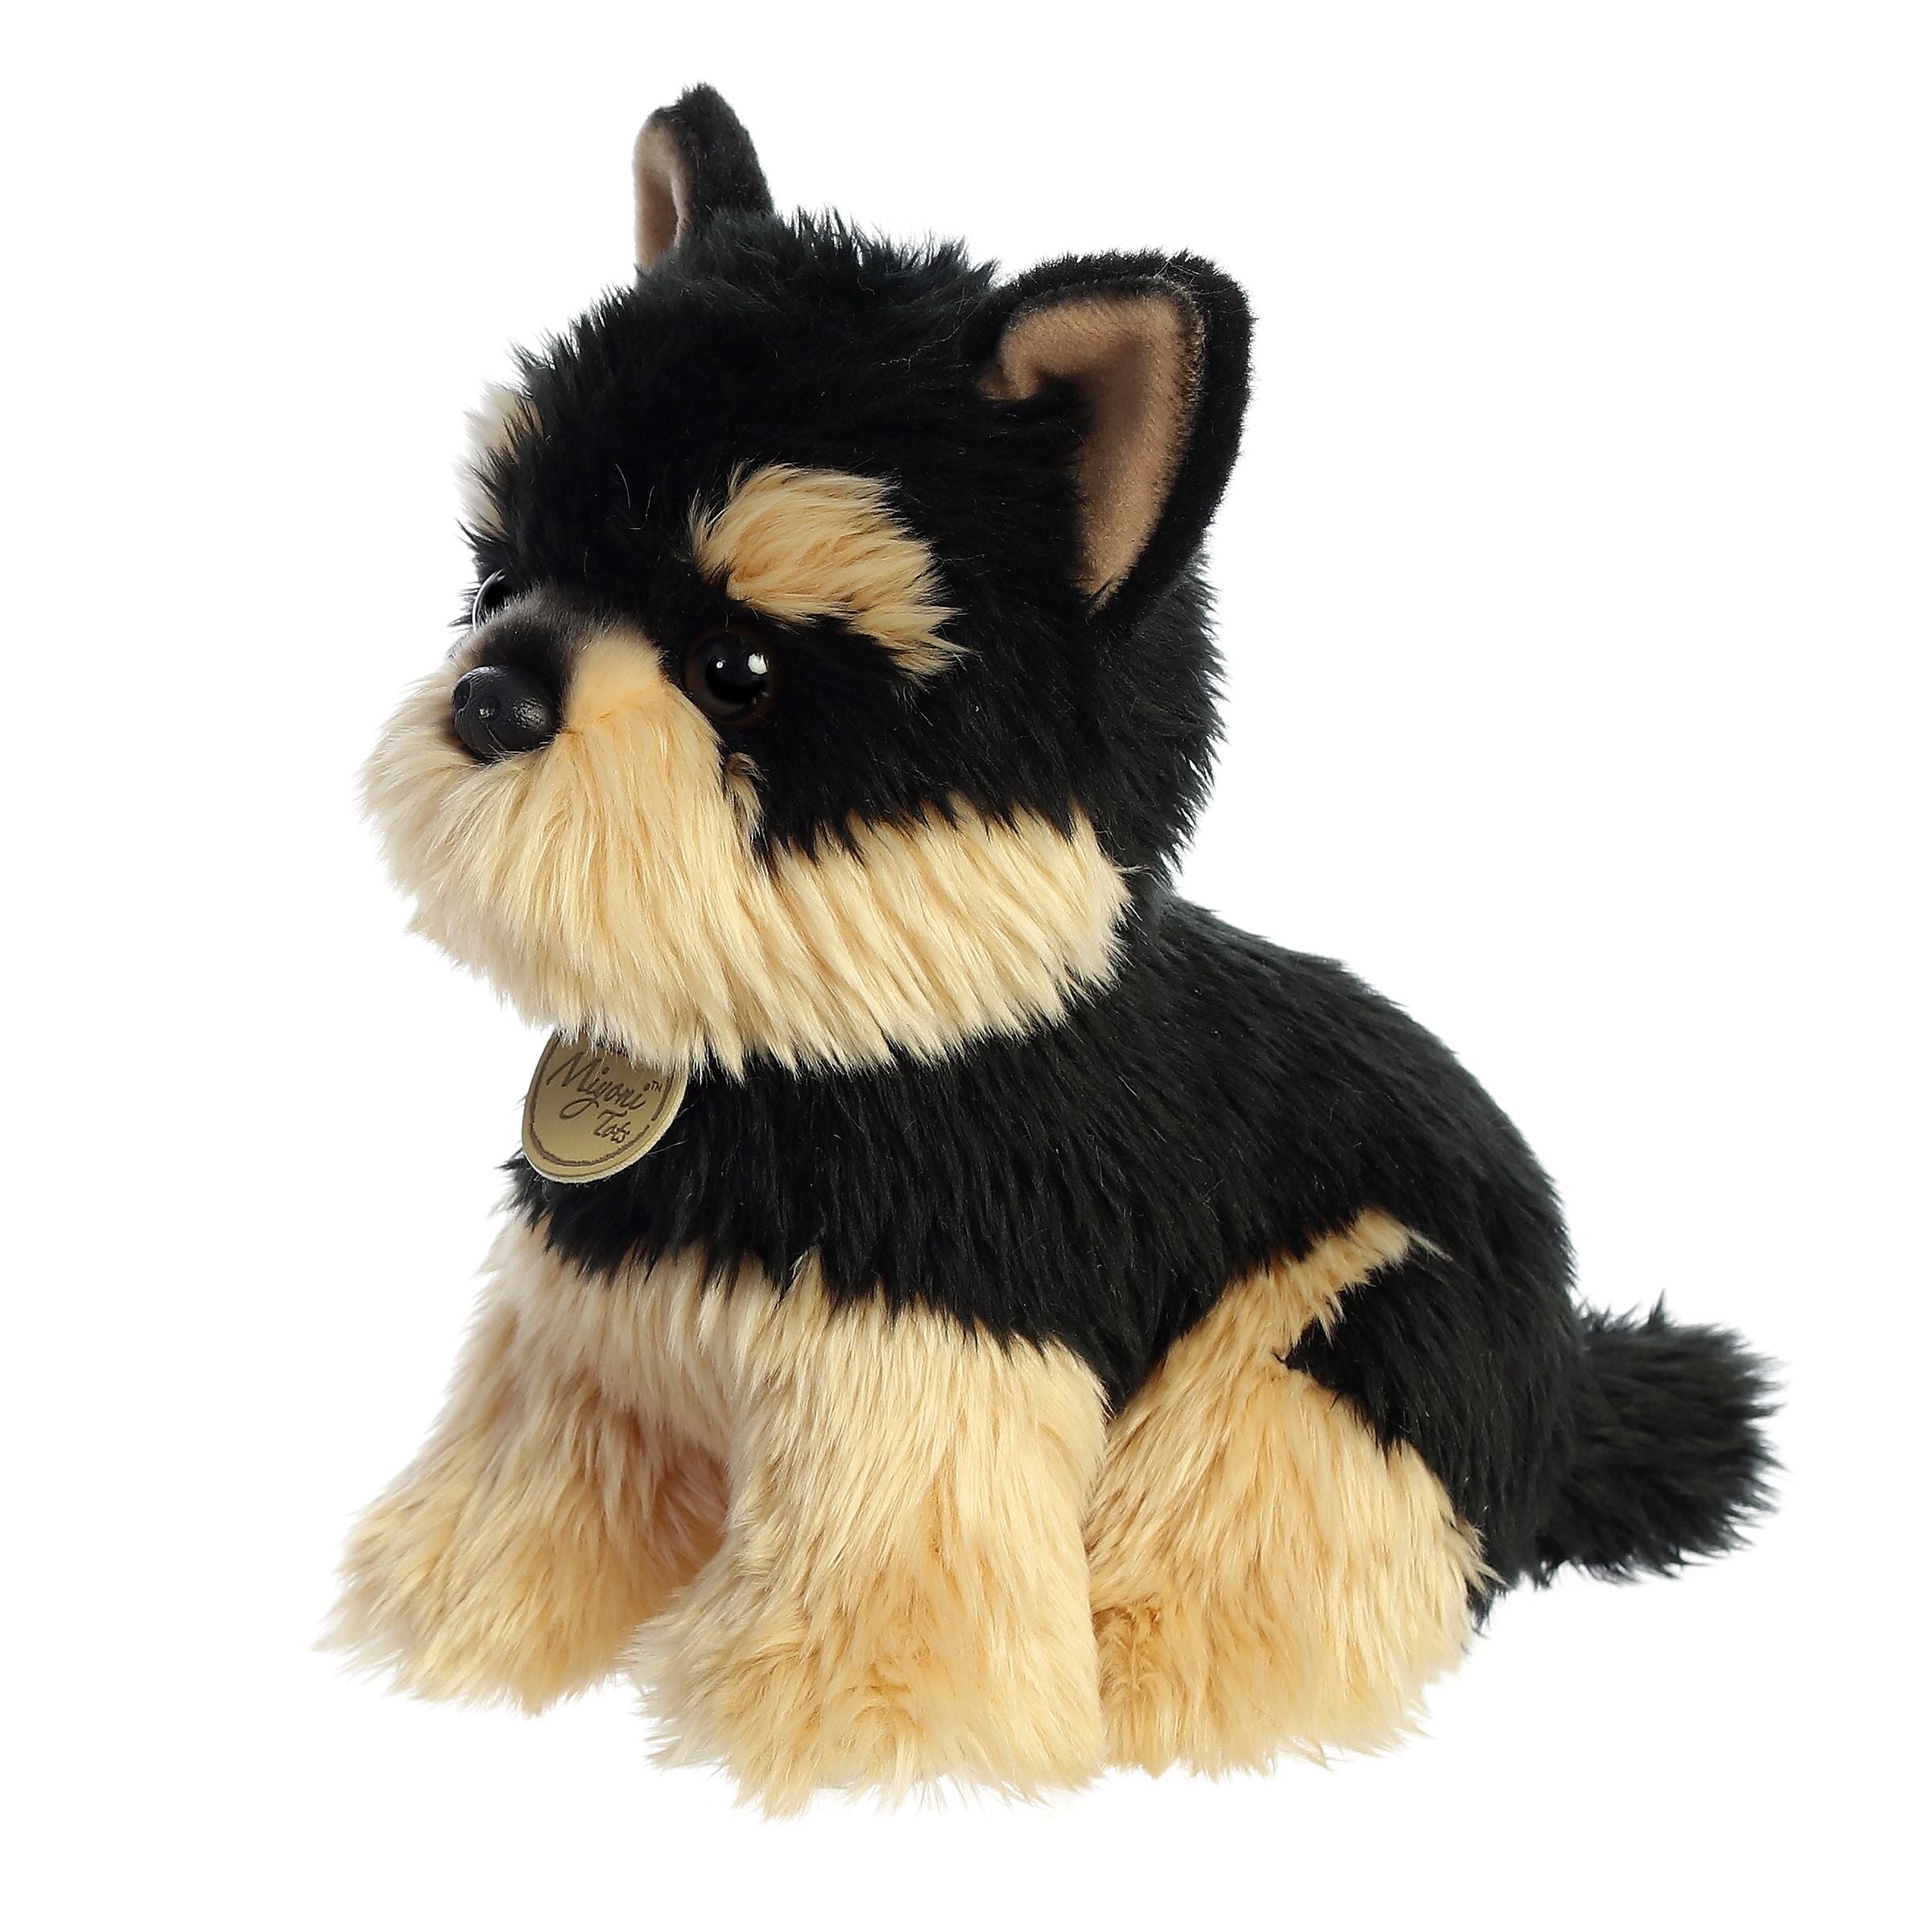 Lifelike Yorkshire Terrier Plush Toys Simulation Stuffed Animal